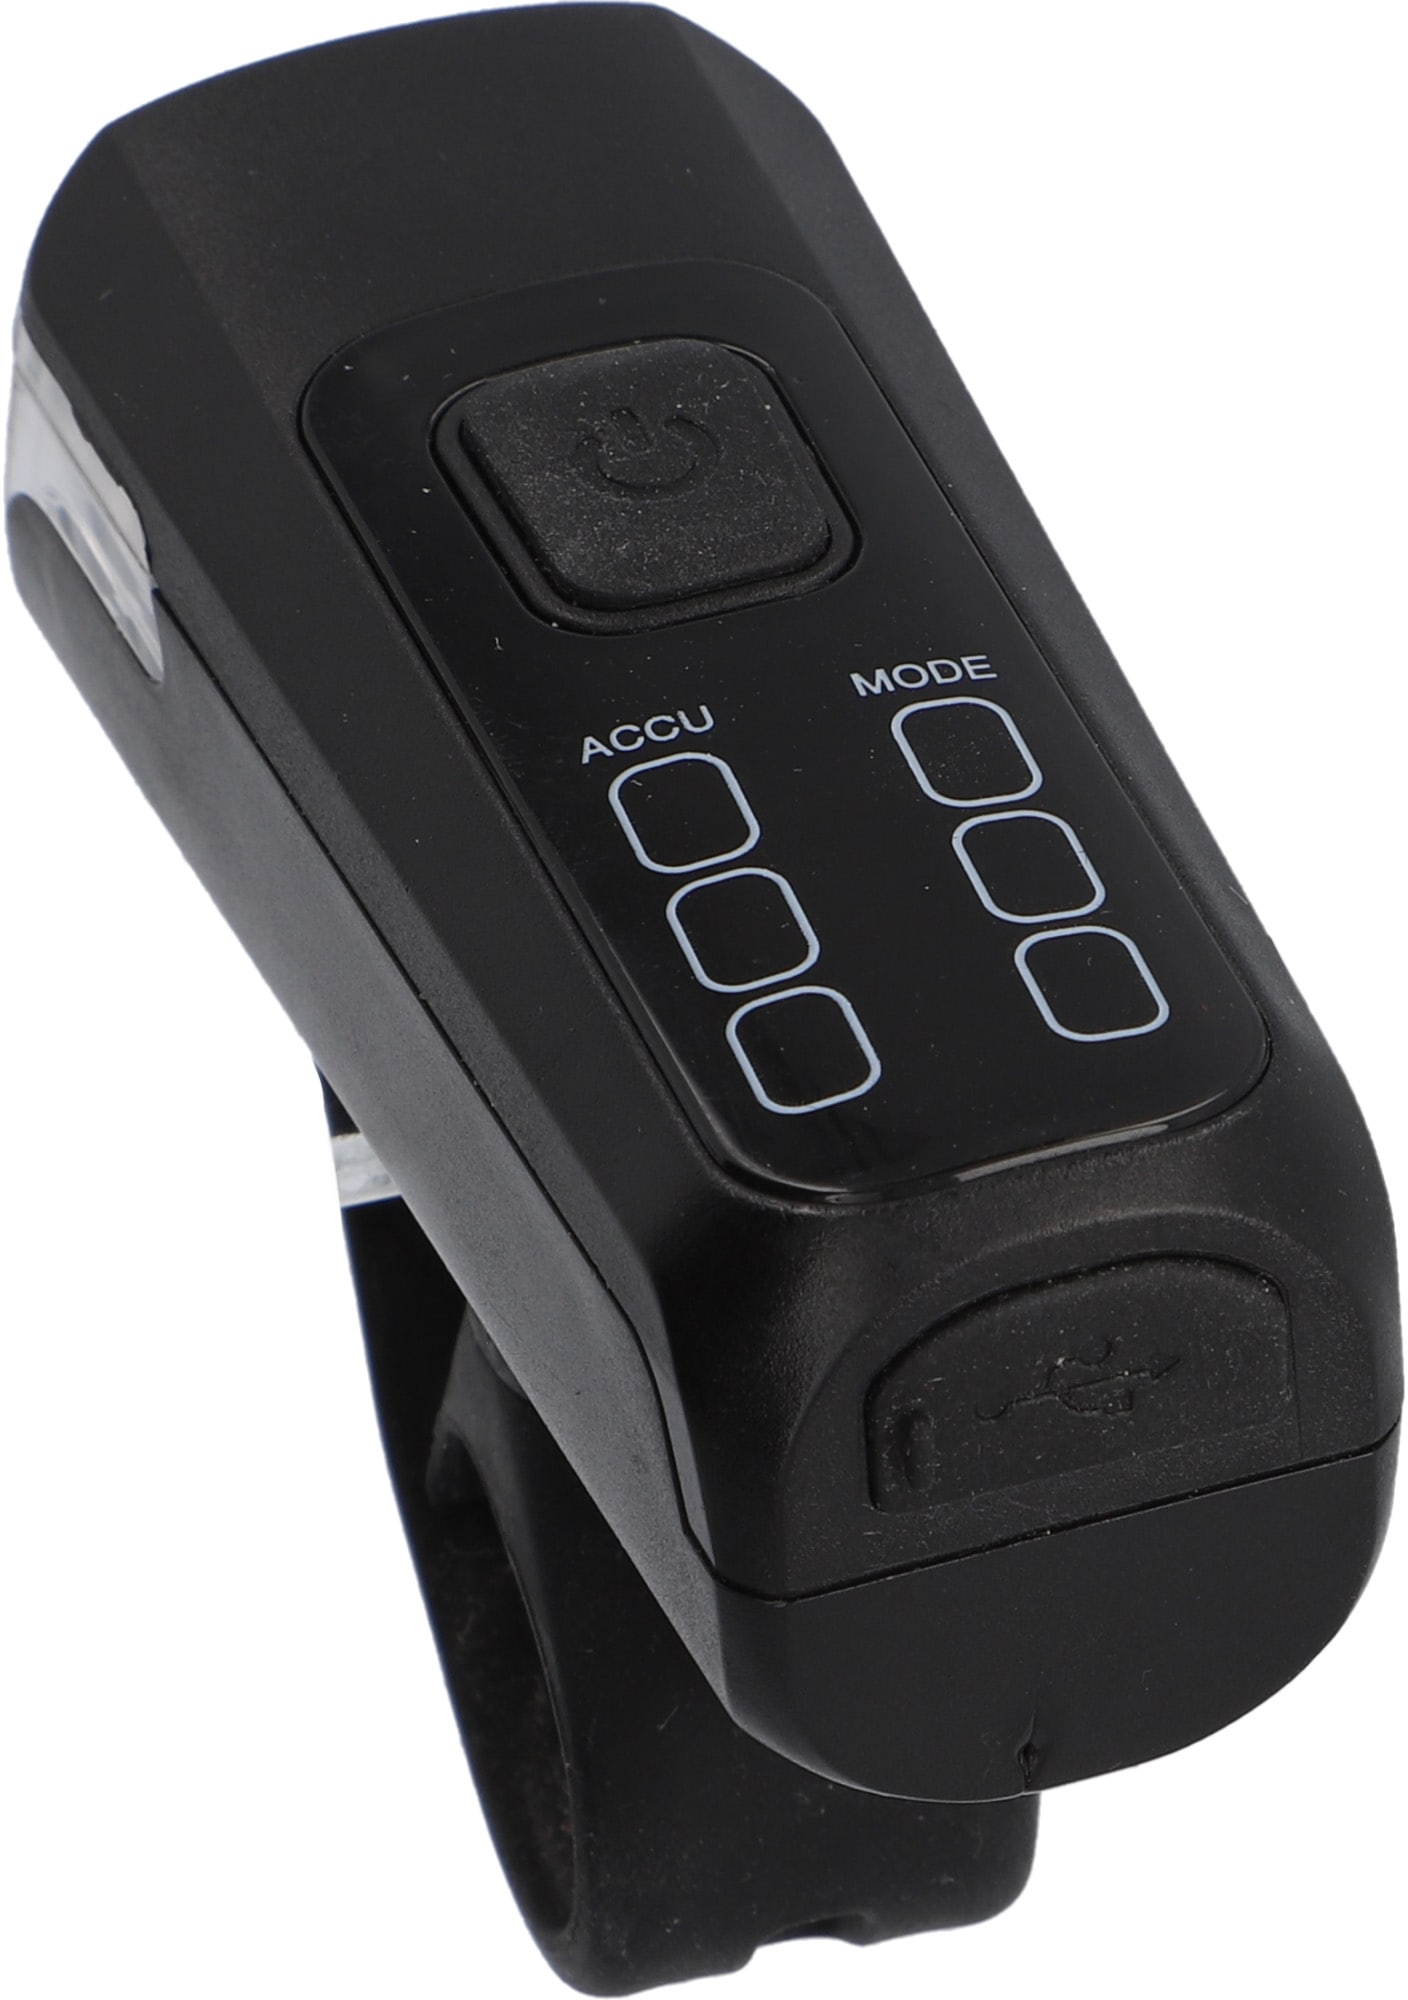 FISCHER Fahrrad Fahrradbeleuchtung »Akku-USB-LED Bel.-Set Bodenbel. 60 Lux«, (3, Front- und Rücklicht)